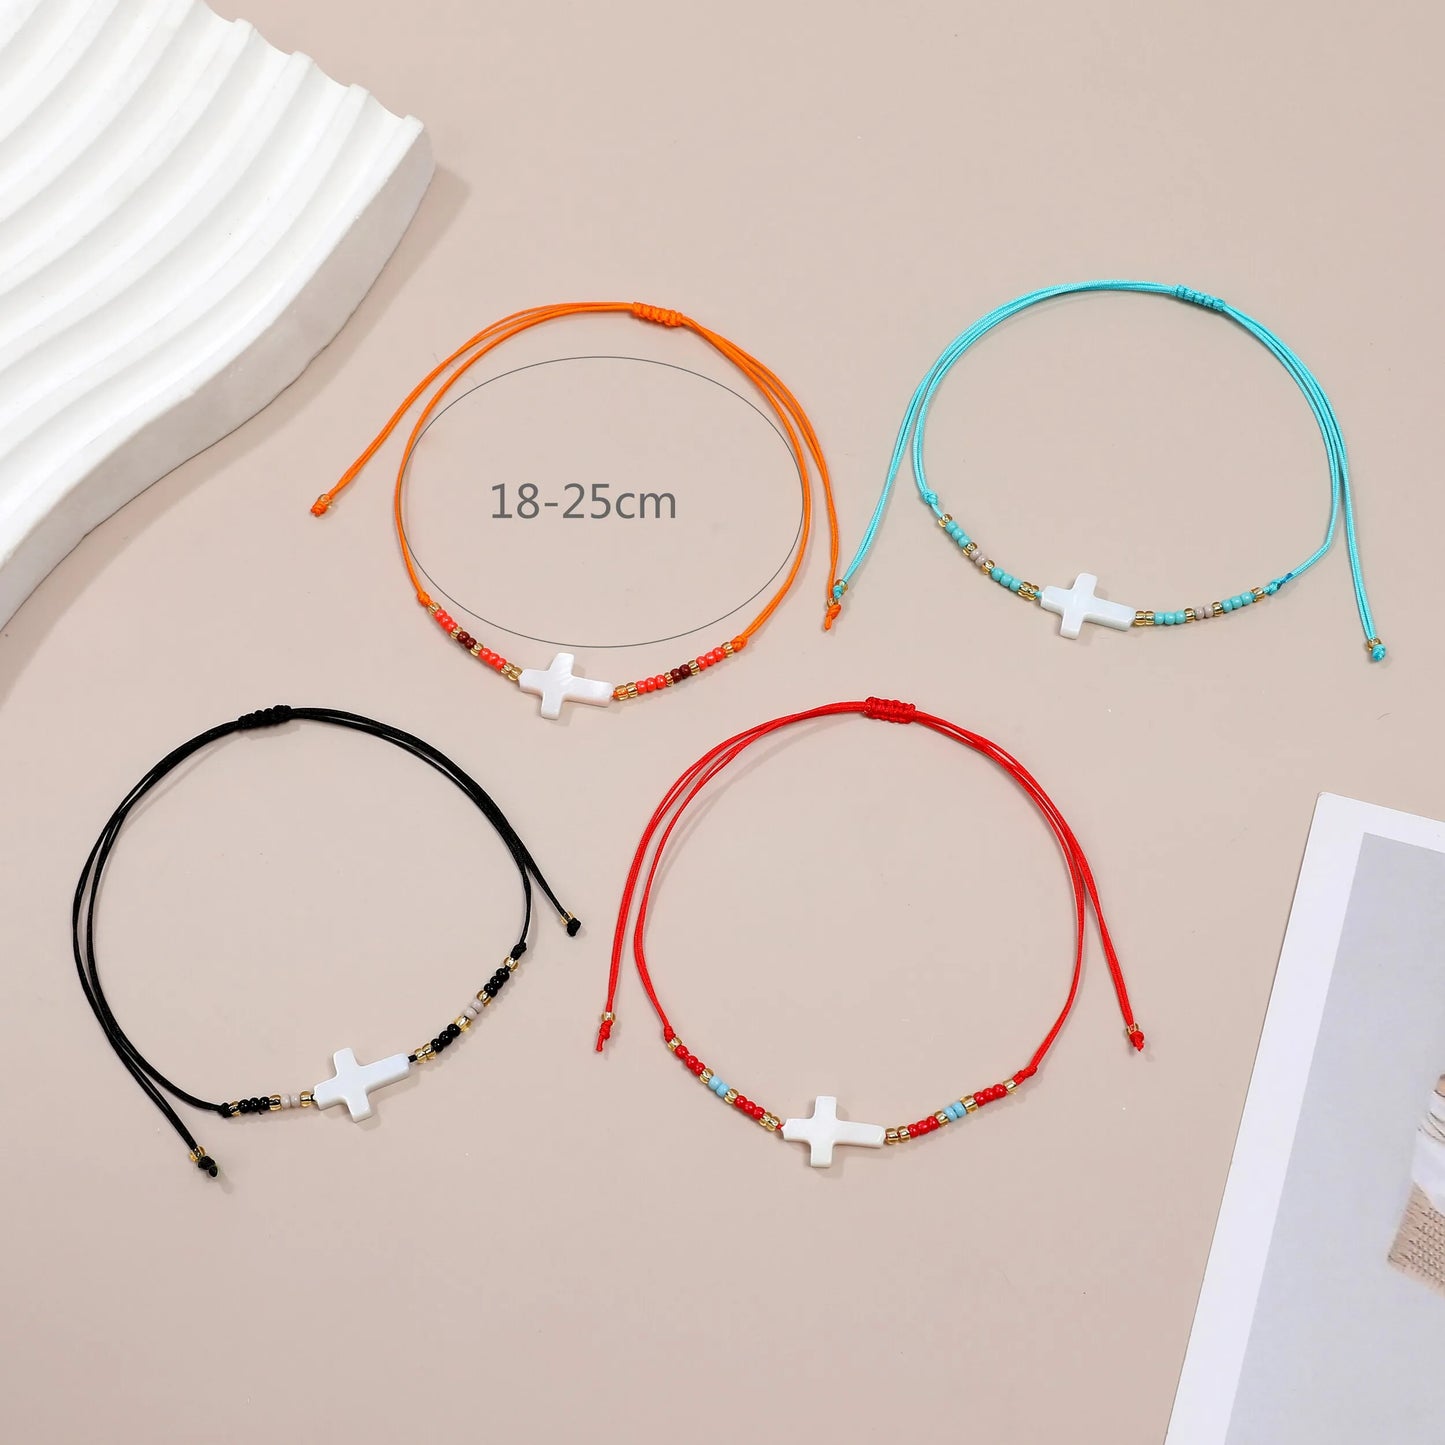 New 12 Pcs/lot Silver Color Cross Knot Charm Bracelets Women Children Elastic Friendship Wristband Jewelry Gift Pulsera